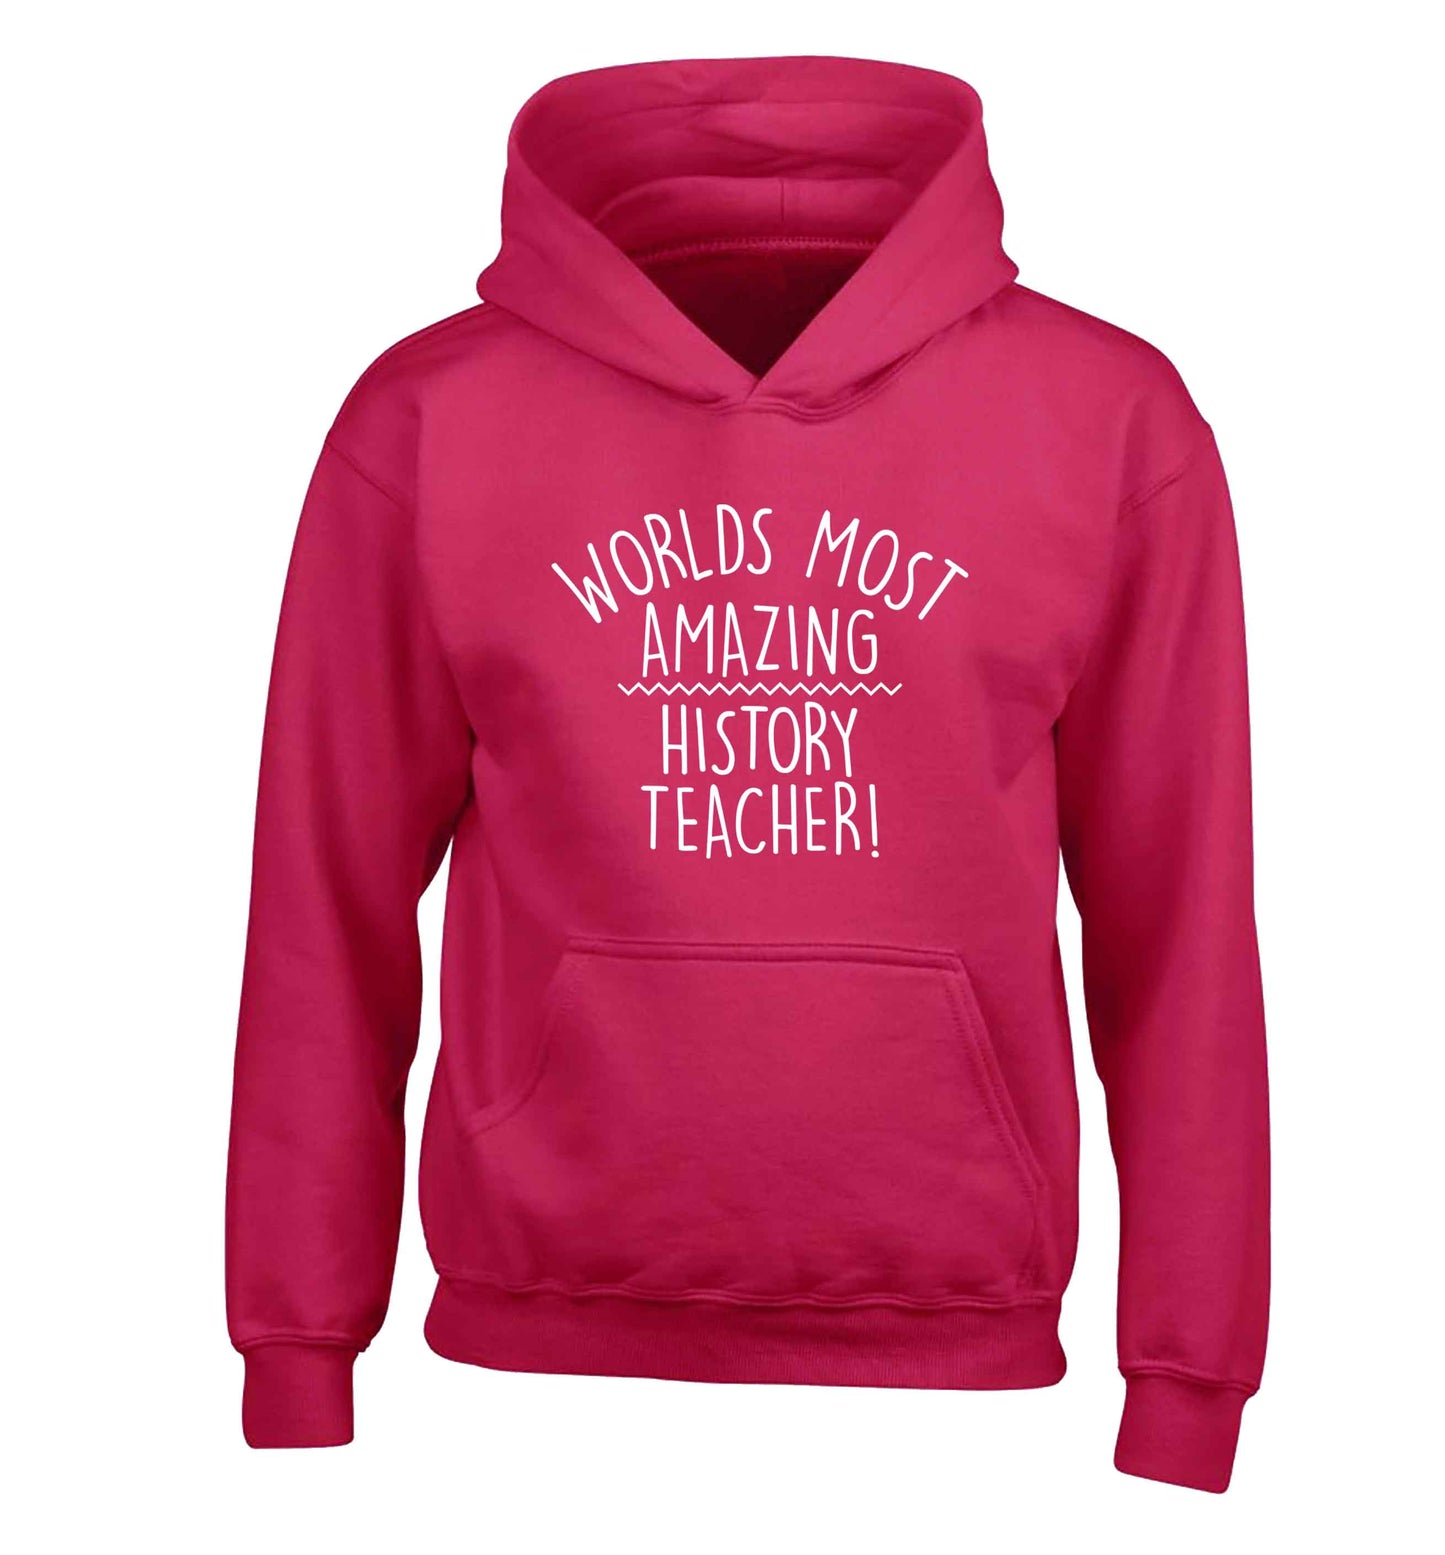 Worlds most amazing History teacher children's pink hoodie 12-13 Years